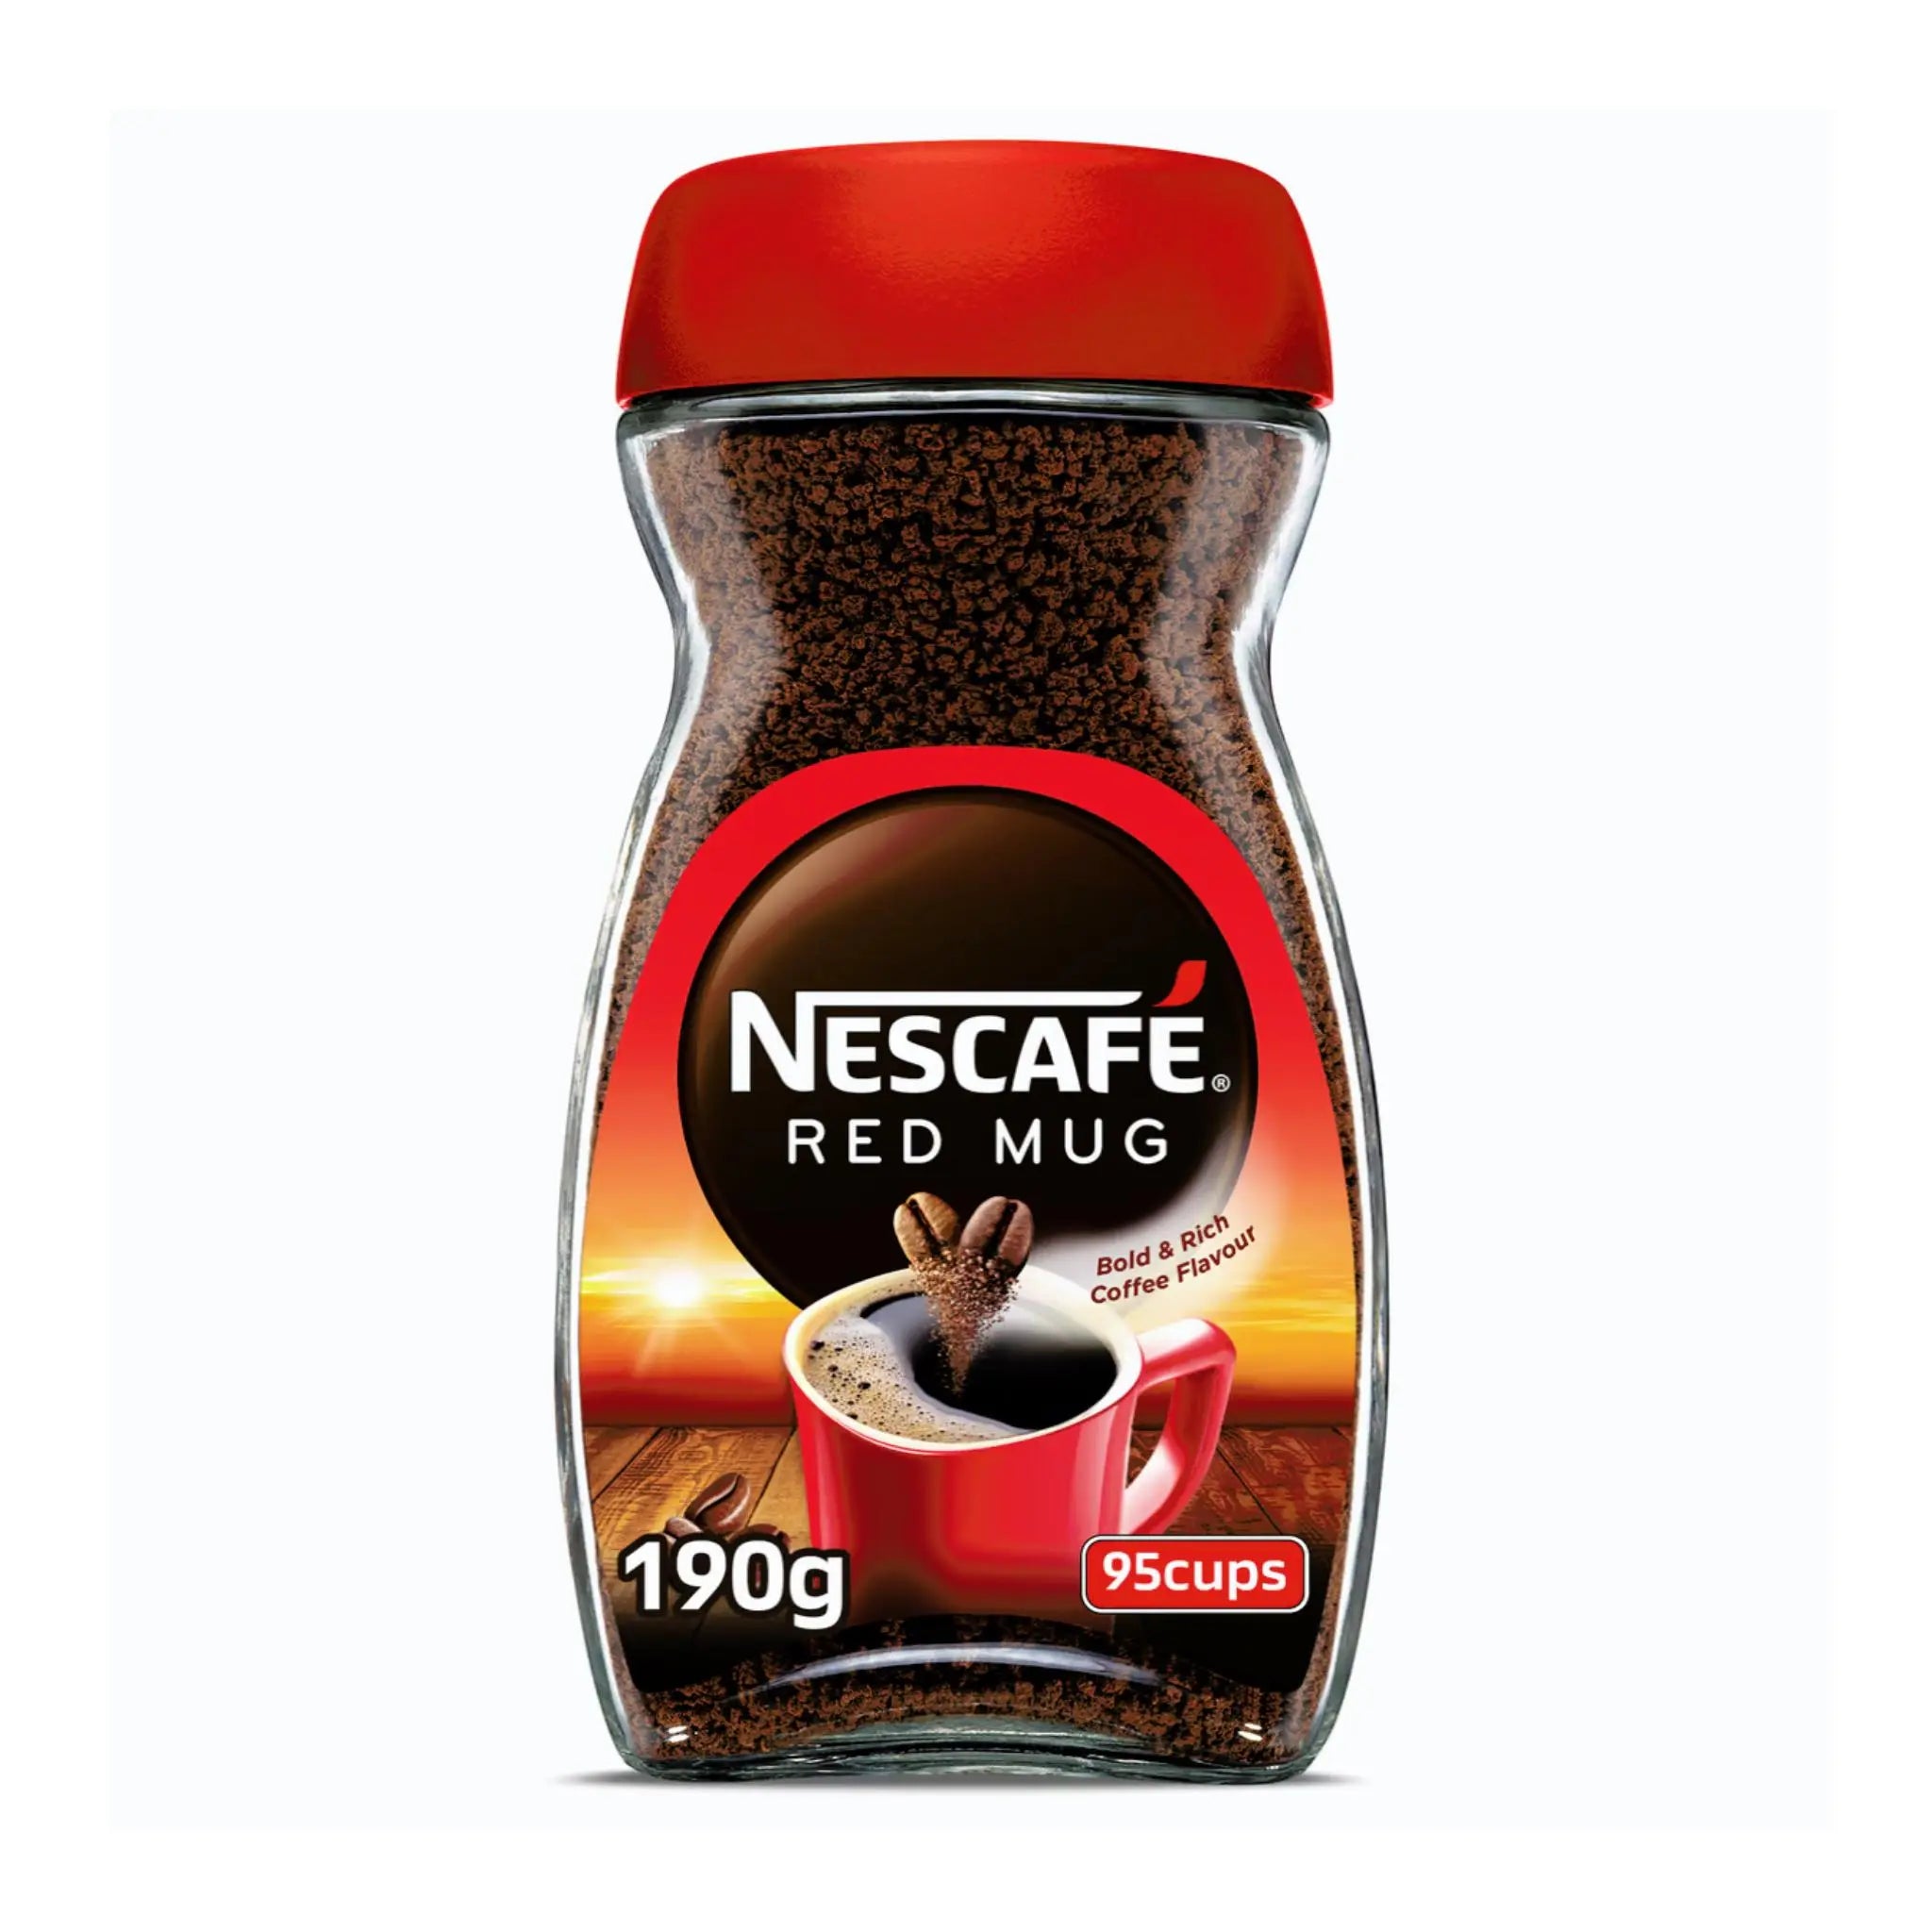 NESCAFE RED MUG SOLUBLE COFFEE 190G - Pack of 6 Marino.AE